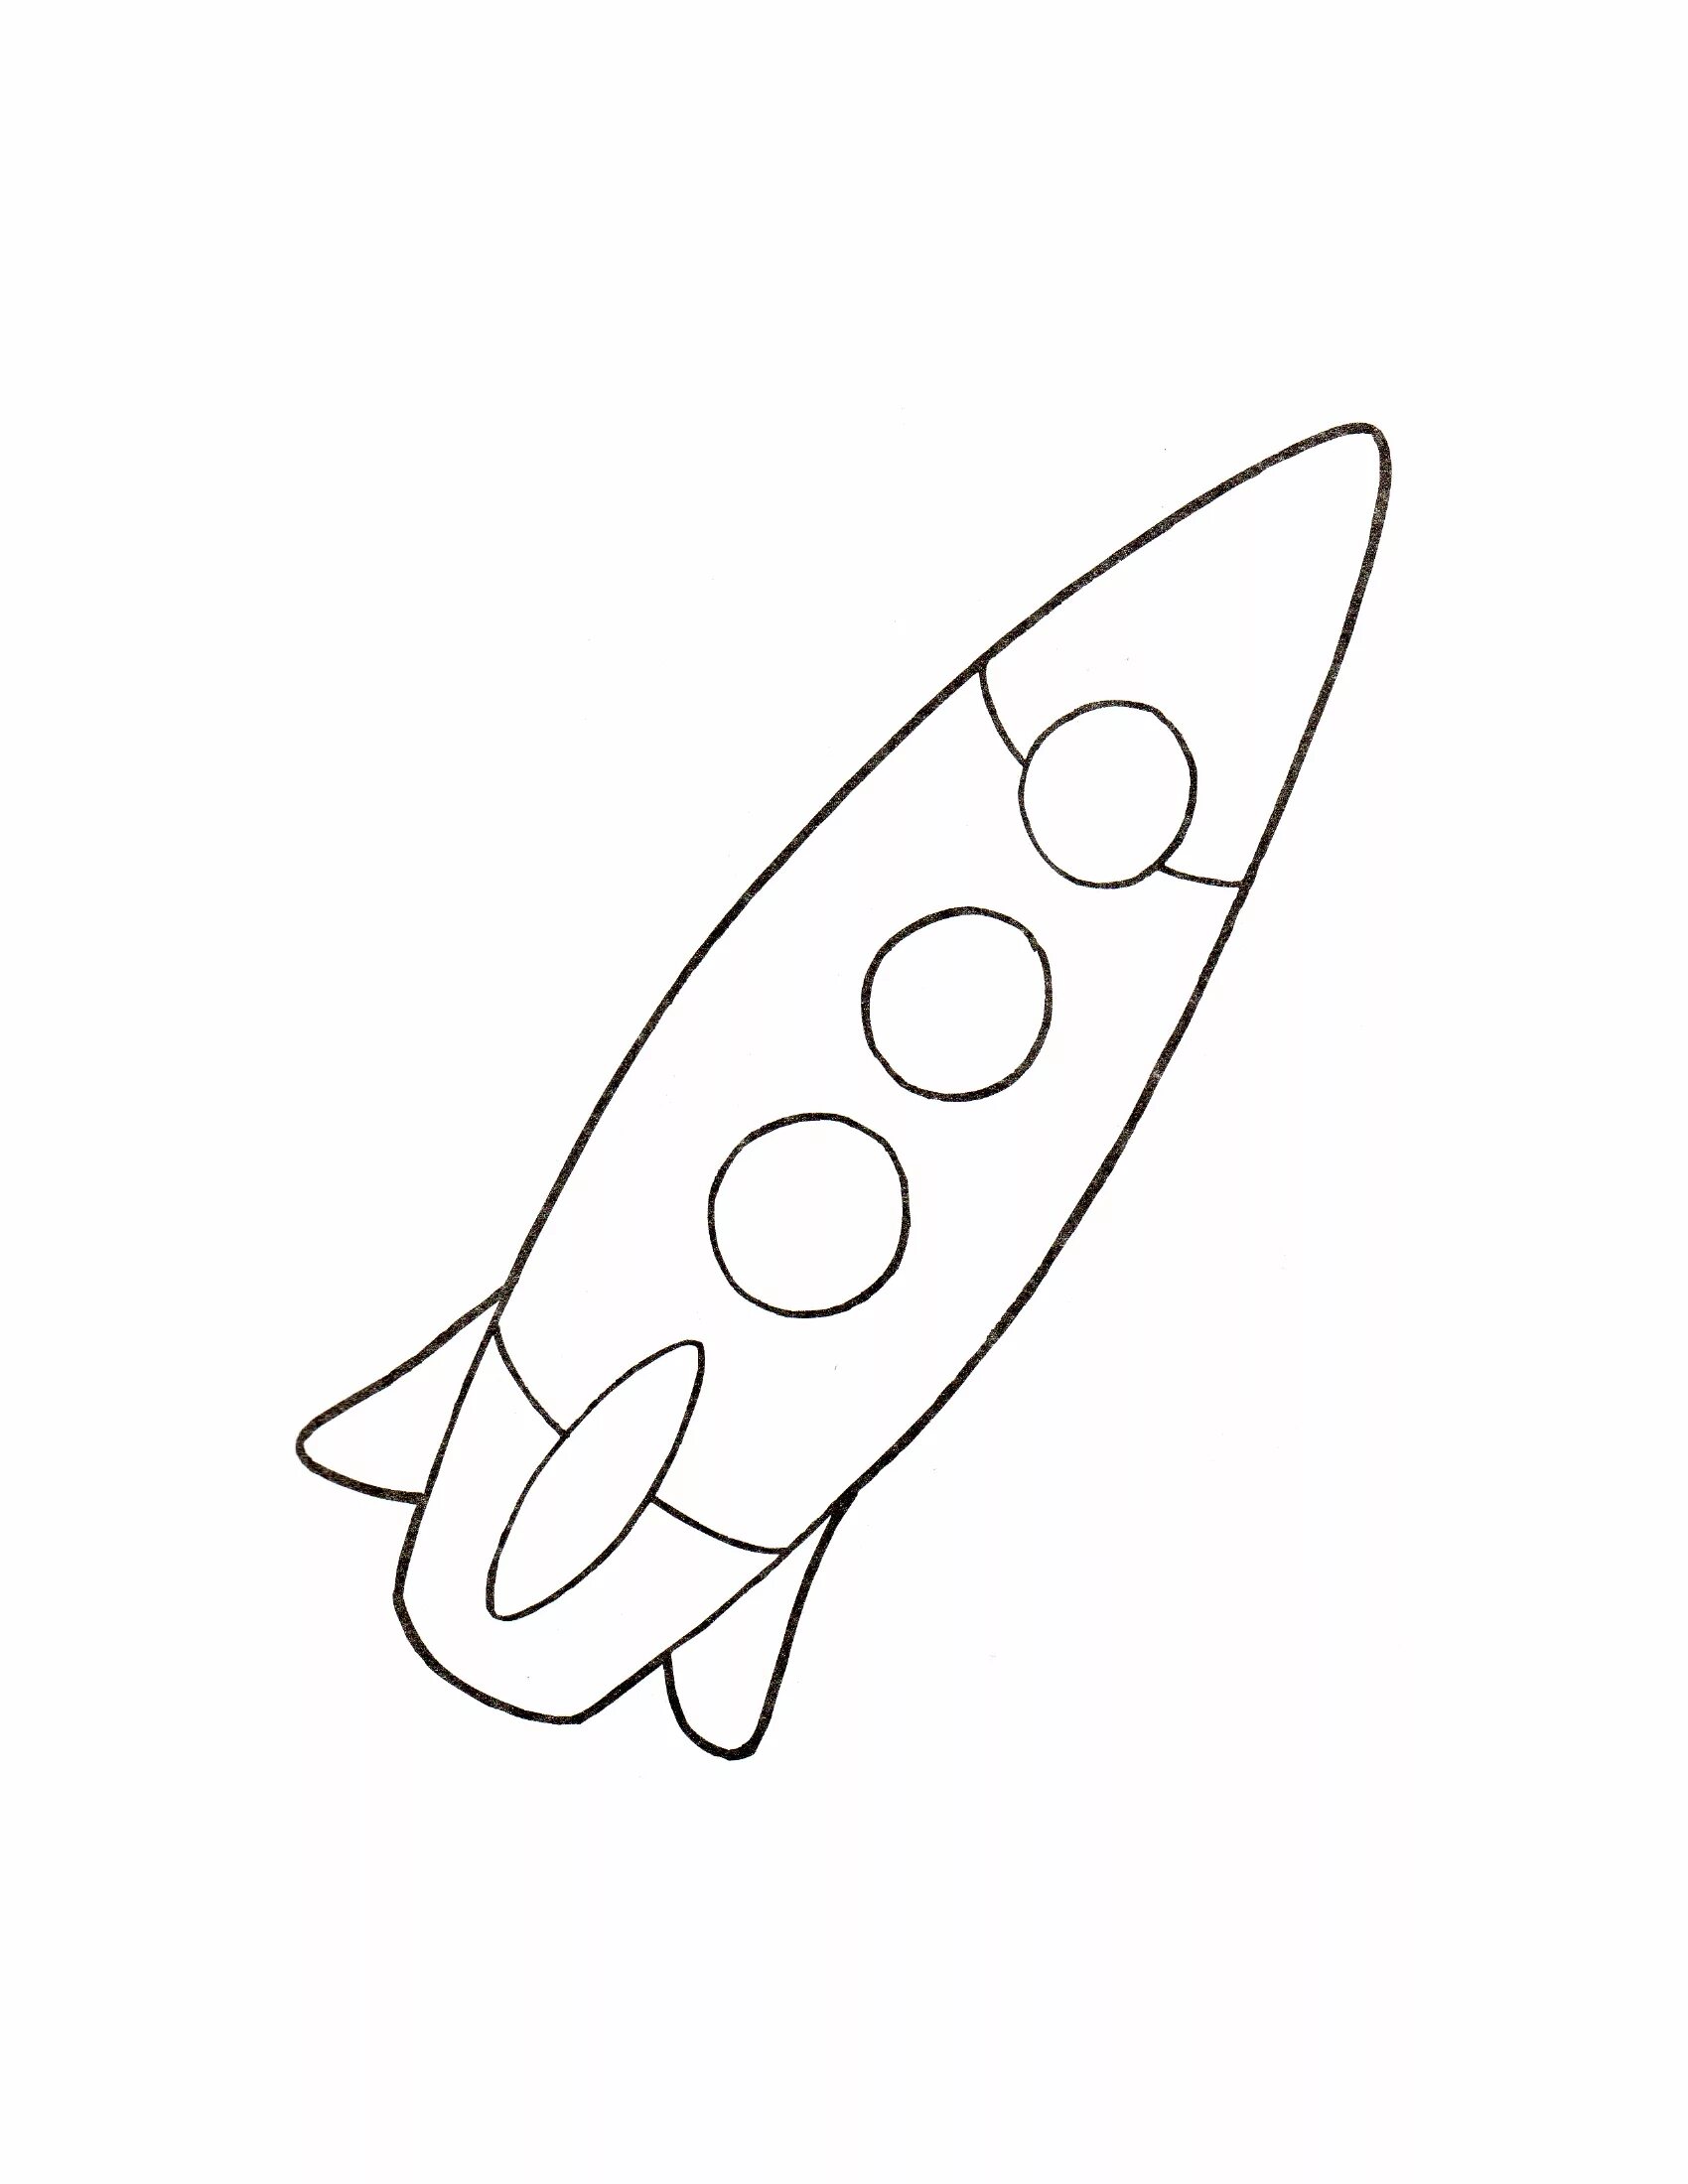 Ракета раскраска. Ракета раскраска для детей. Космическая ракета раскраска. Раскраска ракета для детей 3-4 лет. Ракета раскраска для малышей